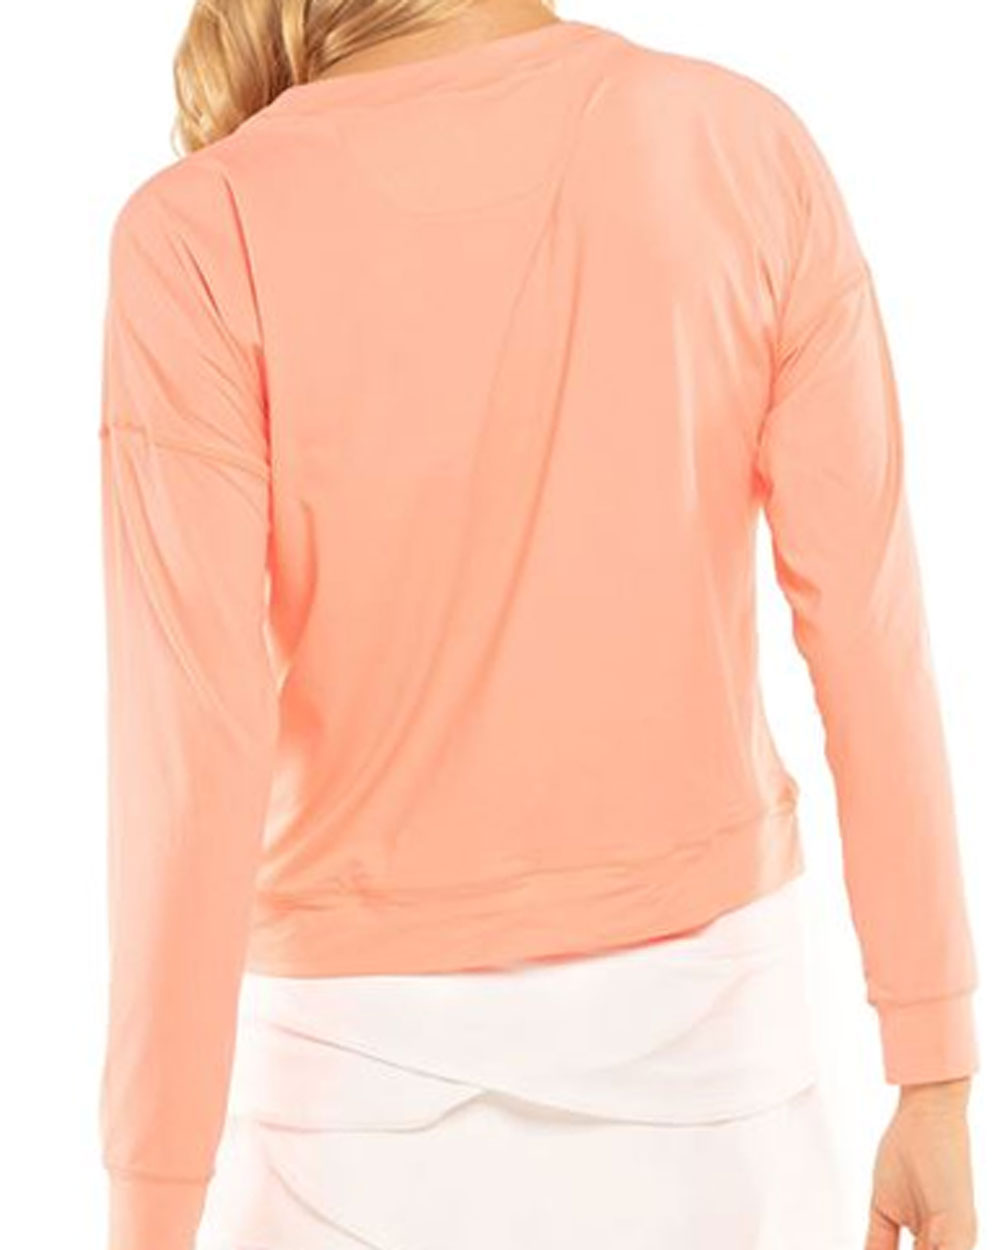 Peach Glow Hype Long Sleeve Top